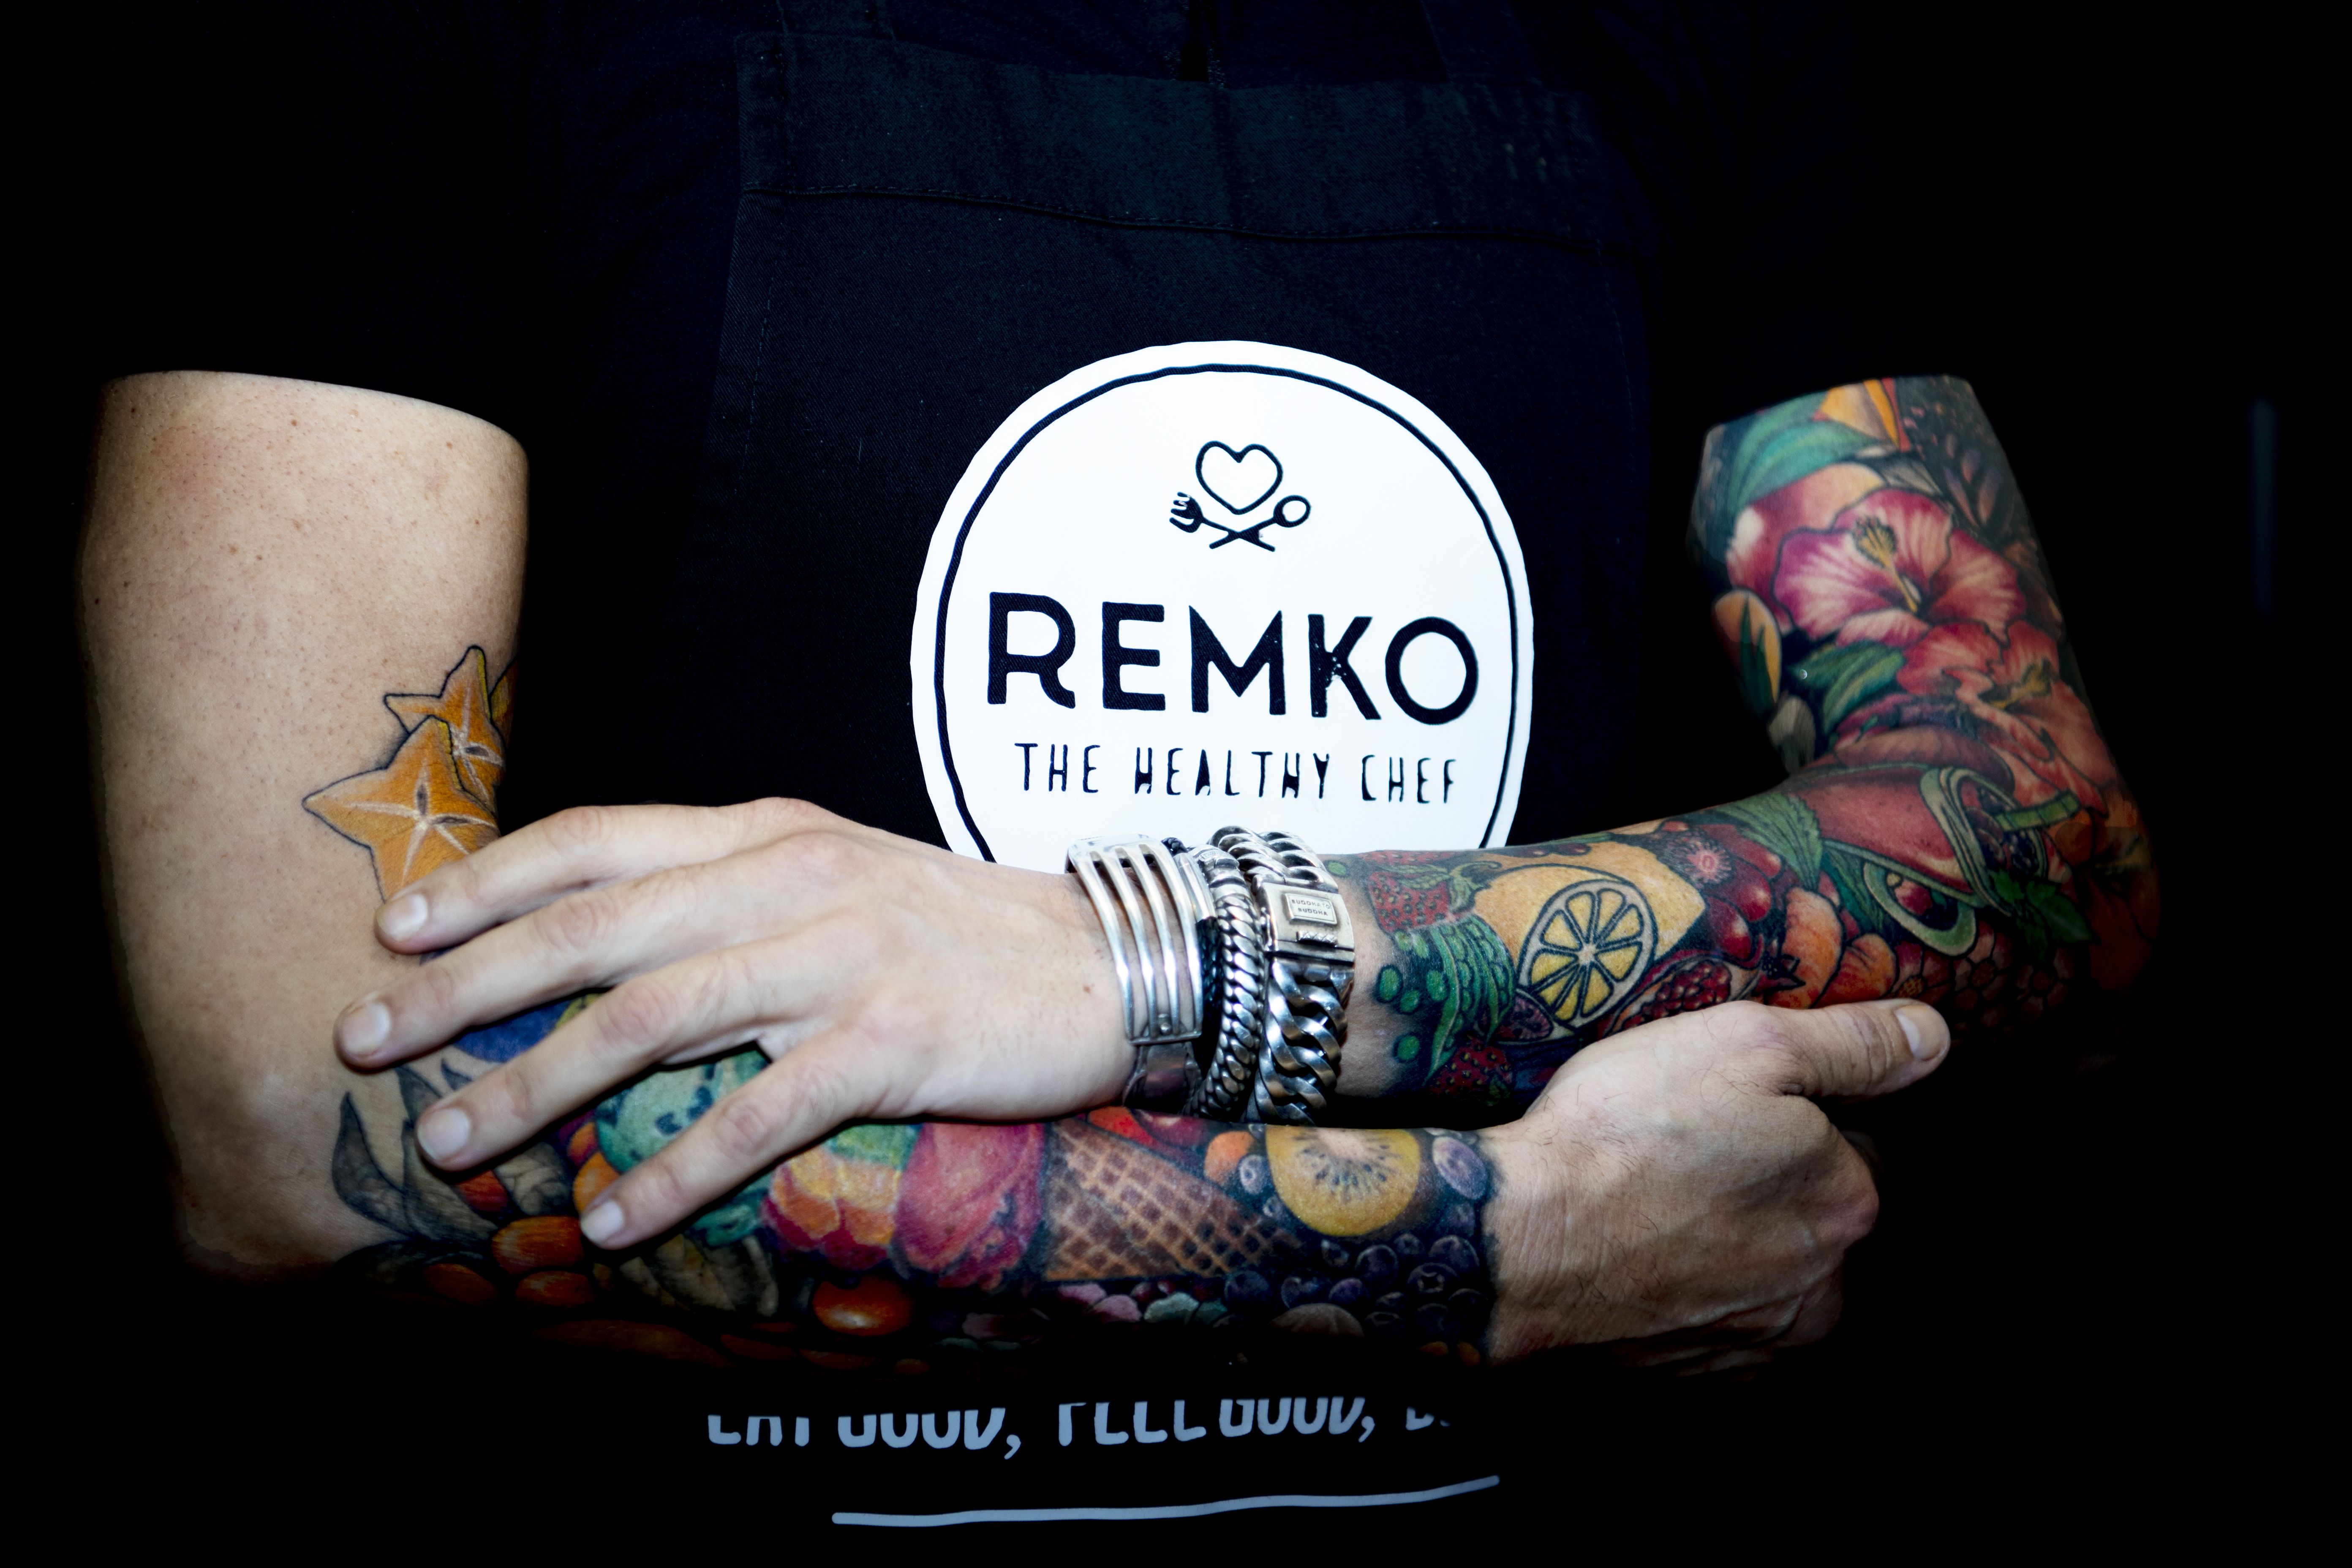 remko-logo-shirt-689d6aeb Remko